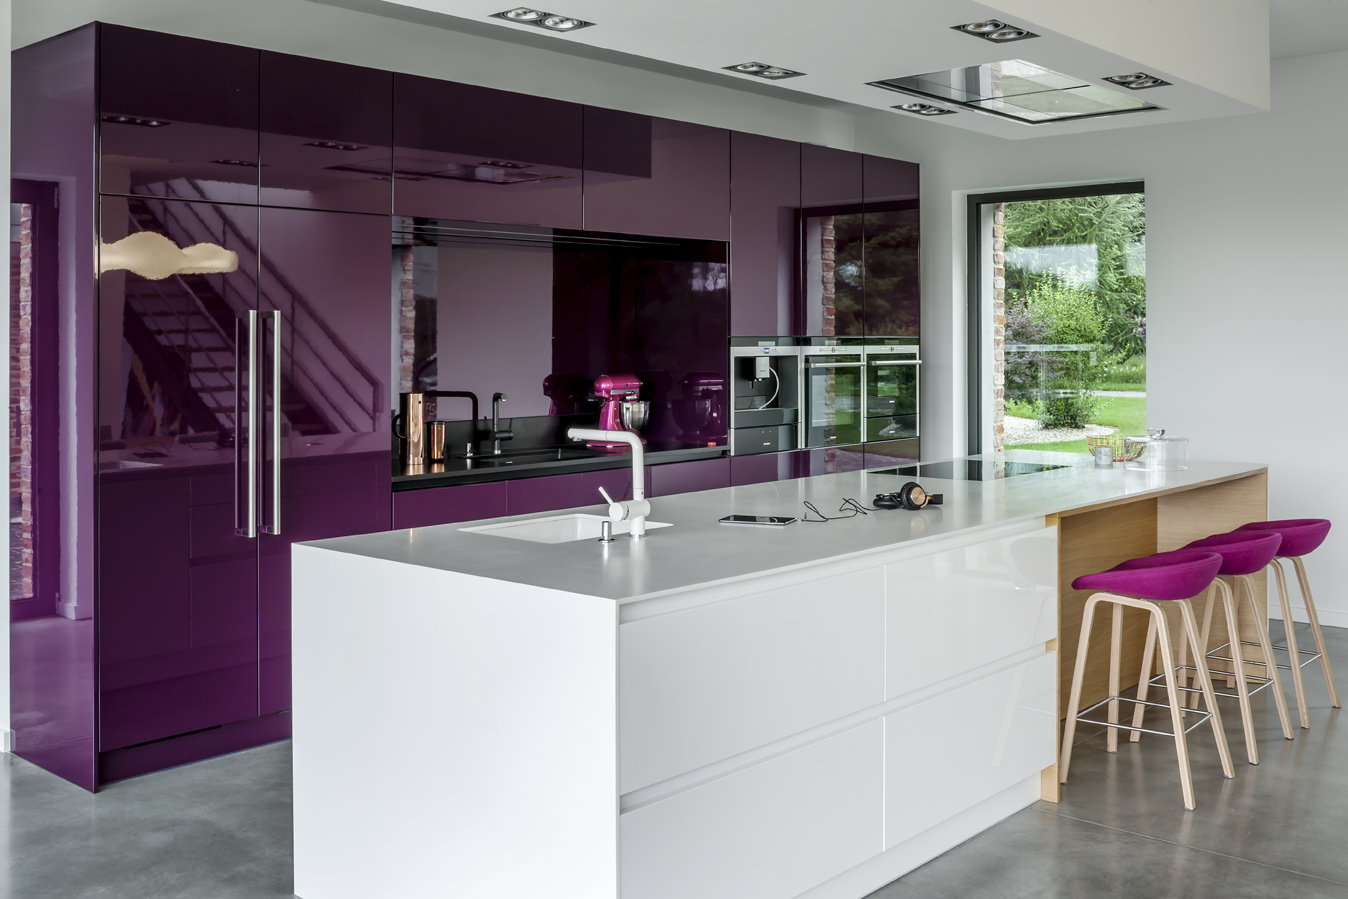 bellissimo design della cucina in tinta viola